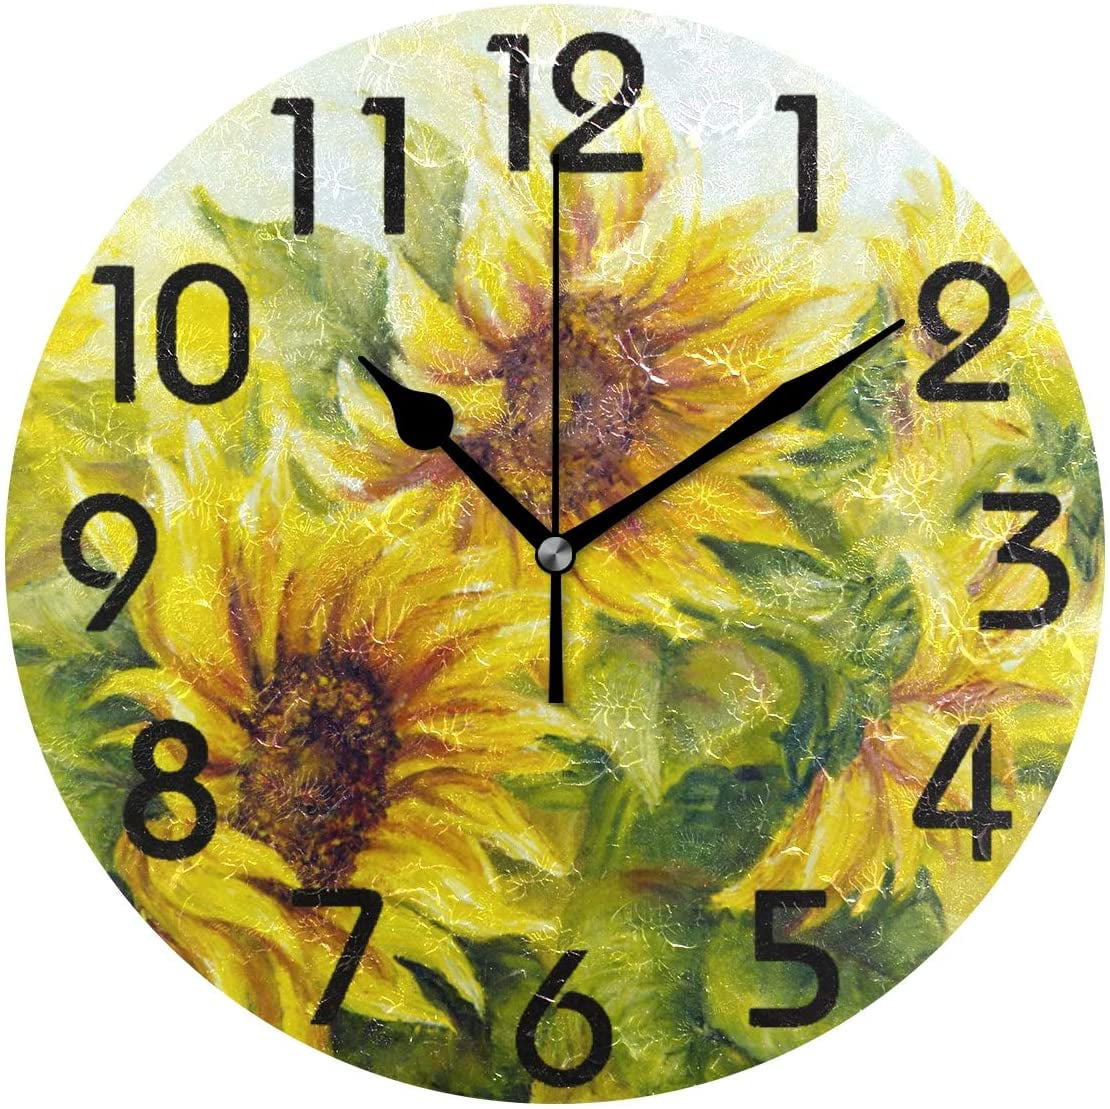 Bathroom Wall Clocks Sunflower On Wood 9.5 Inch Decorative Wall Clock Non-Ticking Silent Kitchen Clock